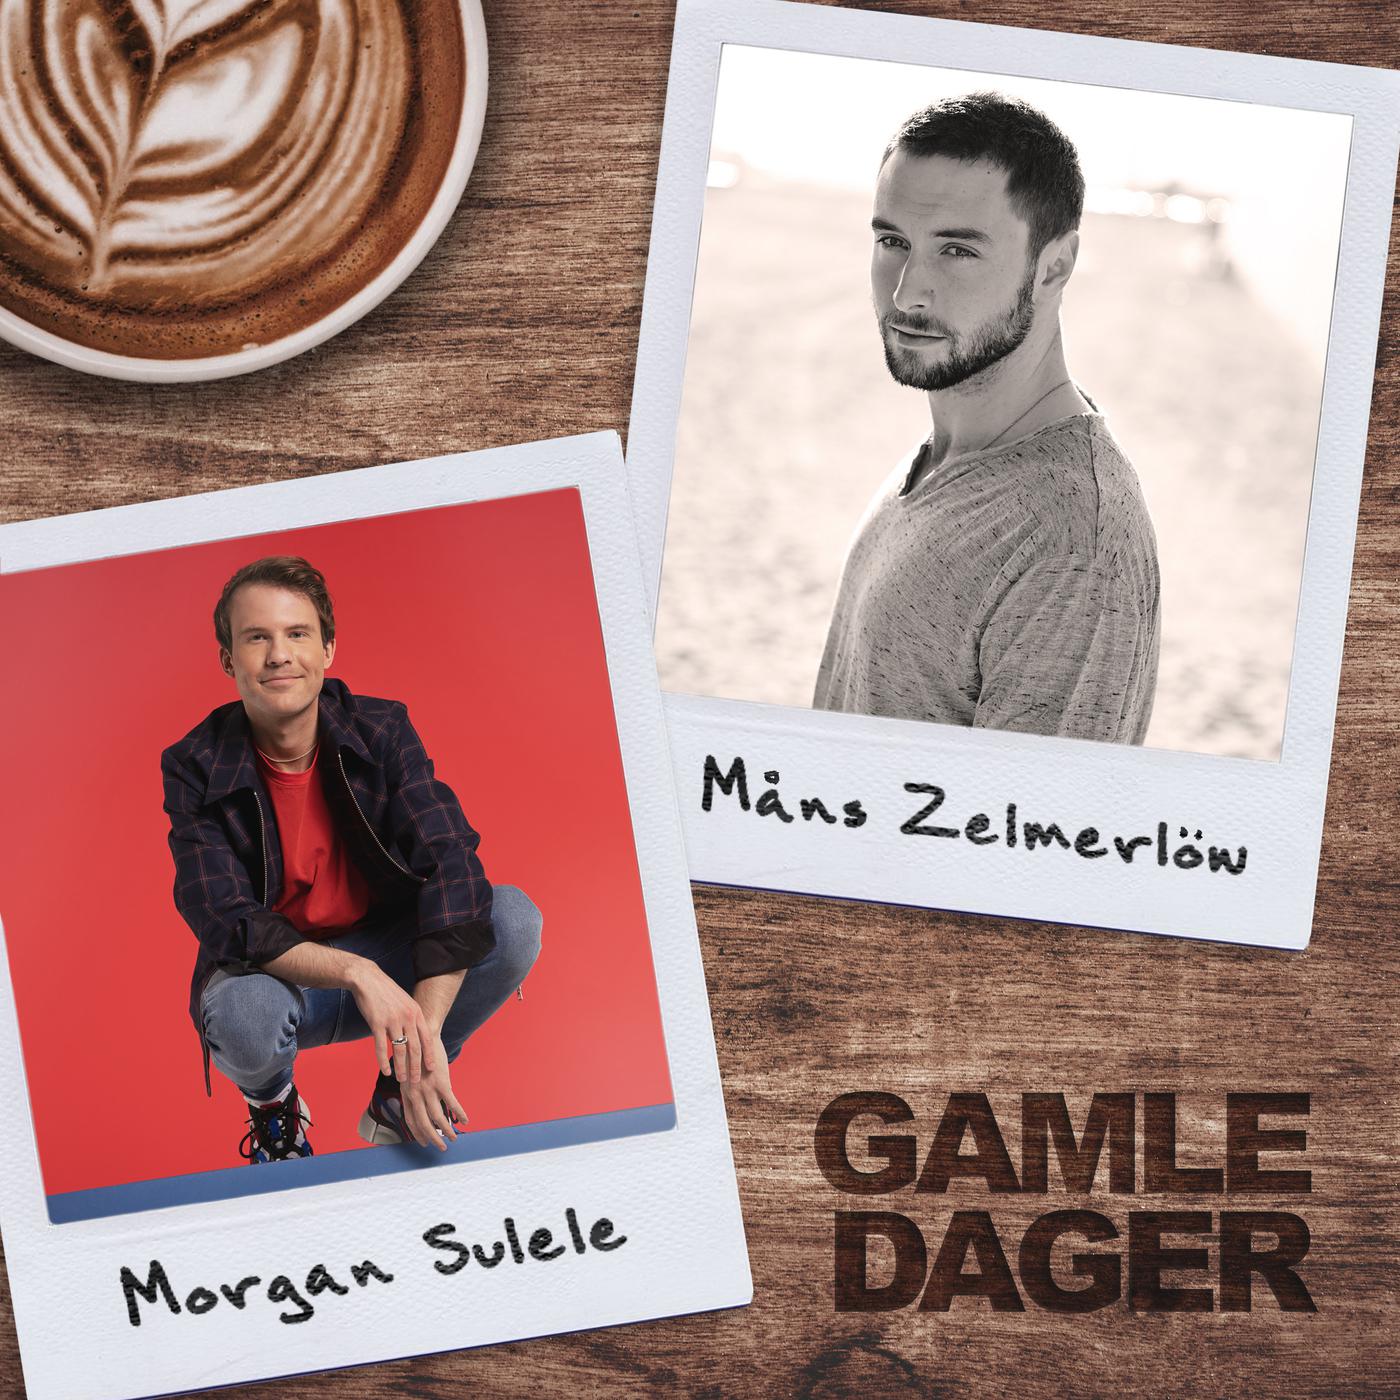 Gamle Dager歌词 歌手Morgan Sulele / Måns Zelmerlöw-专辑Gamle Dager-单曲《Gamle Dager》LRC歌词下载